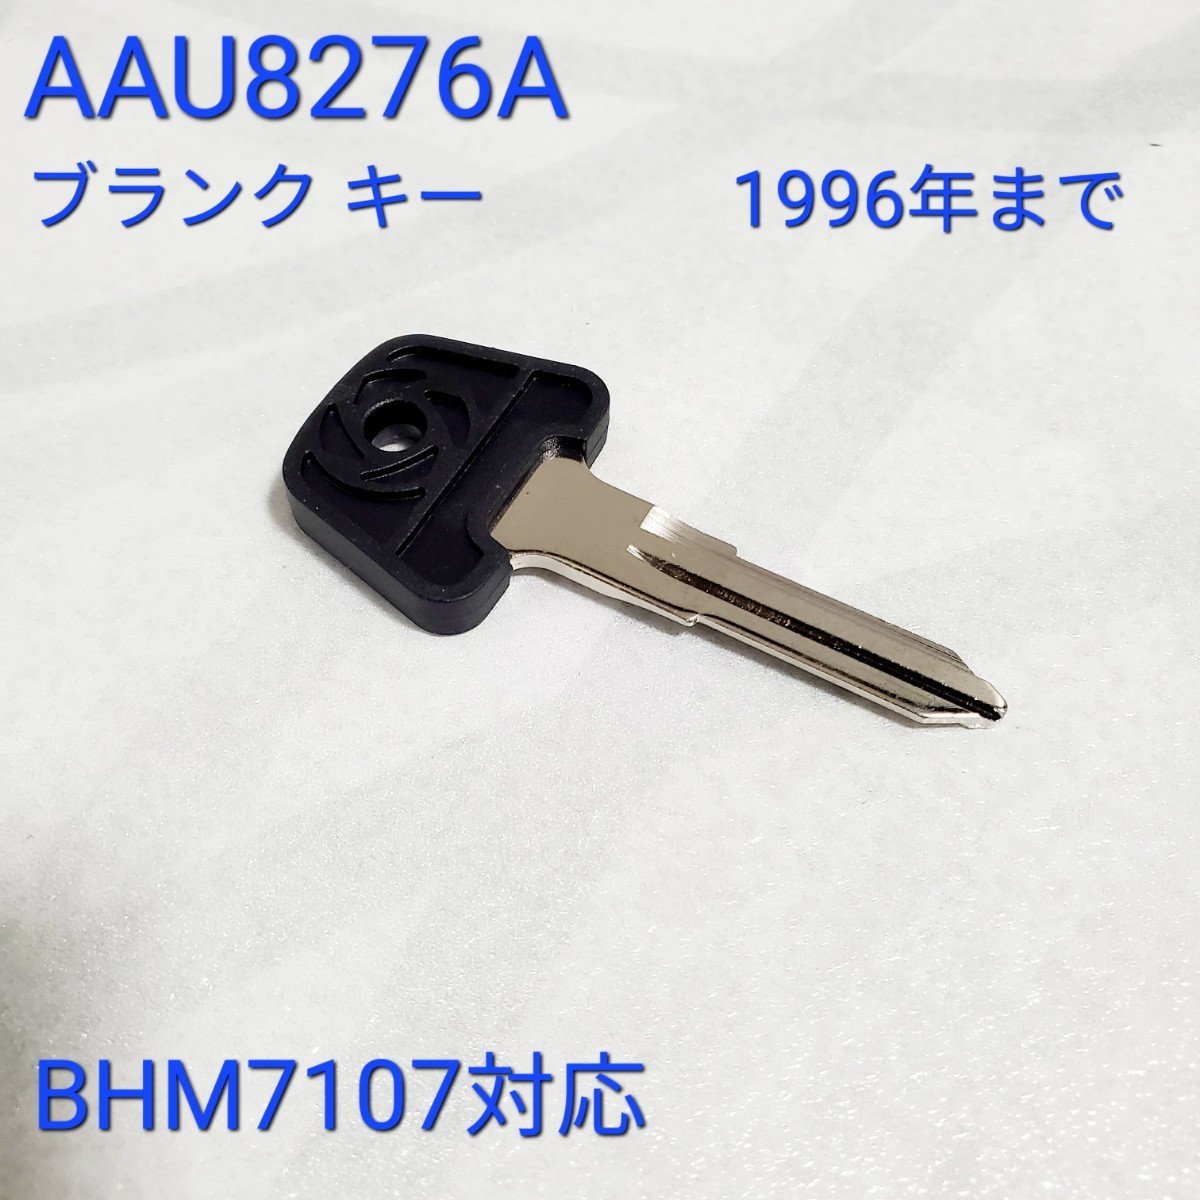  Rover Mini ignition key angle hole type Rover Mini spare key AAU8276A original OEM 1976~1996 year not yet cut key BHM7107. correspondence 